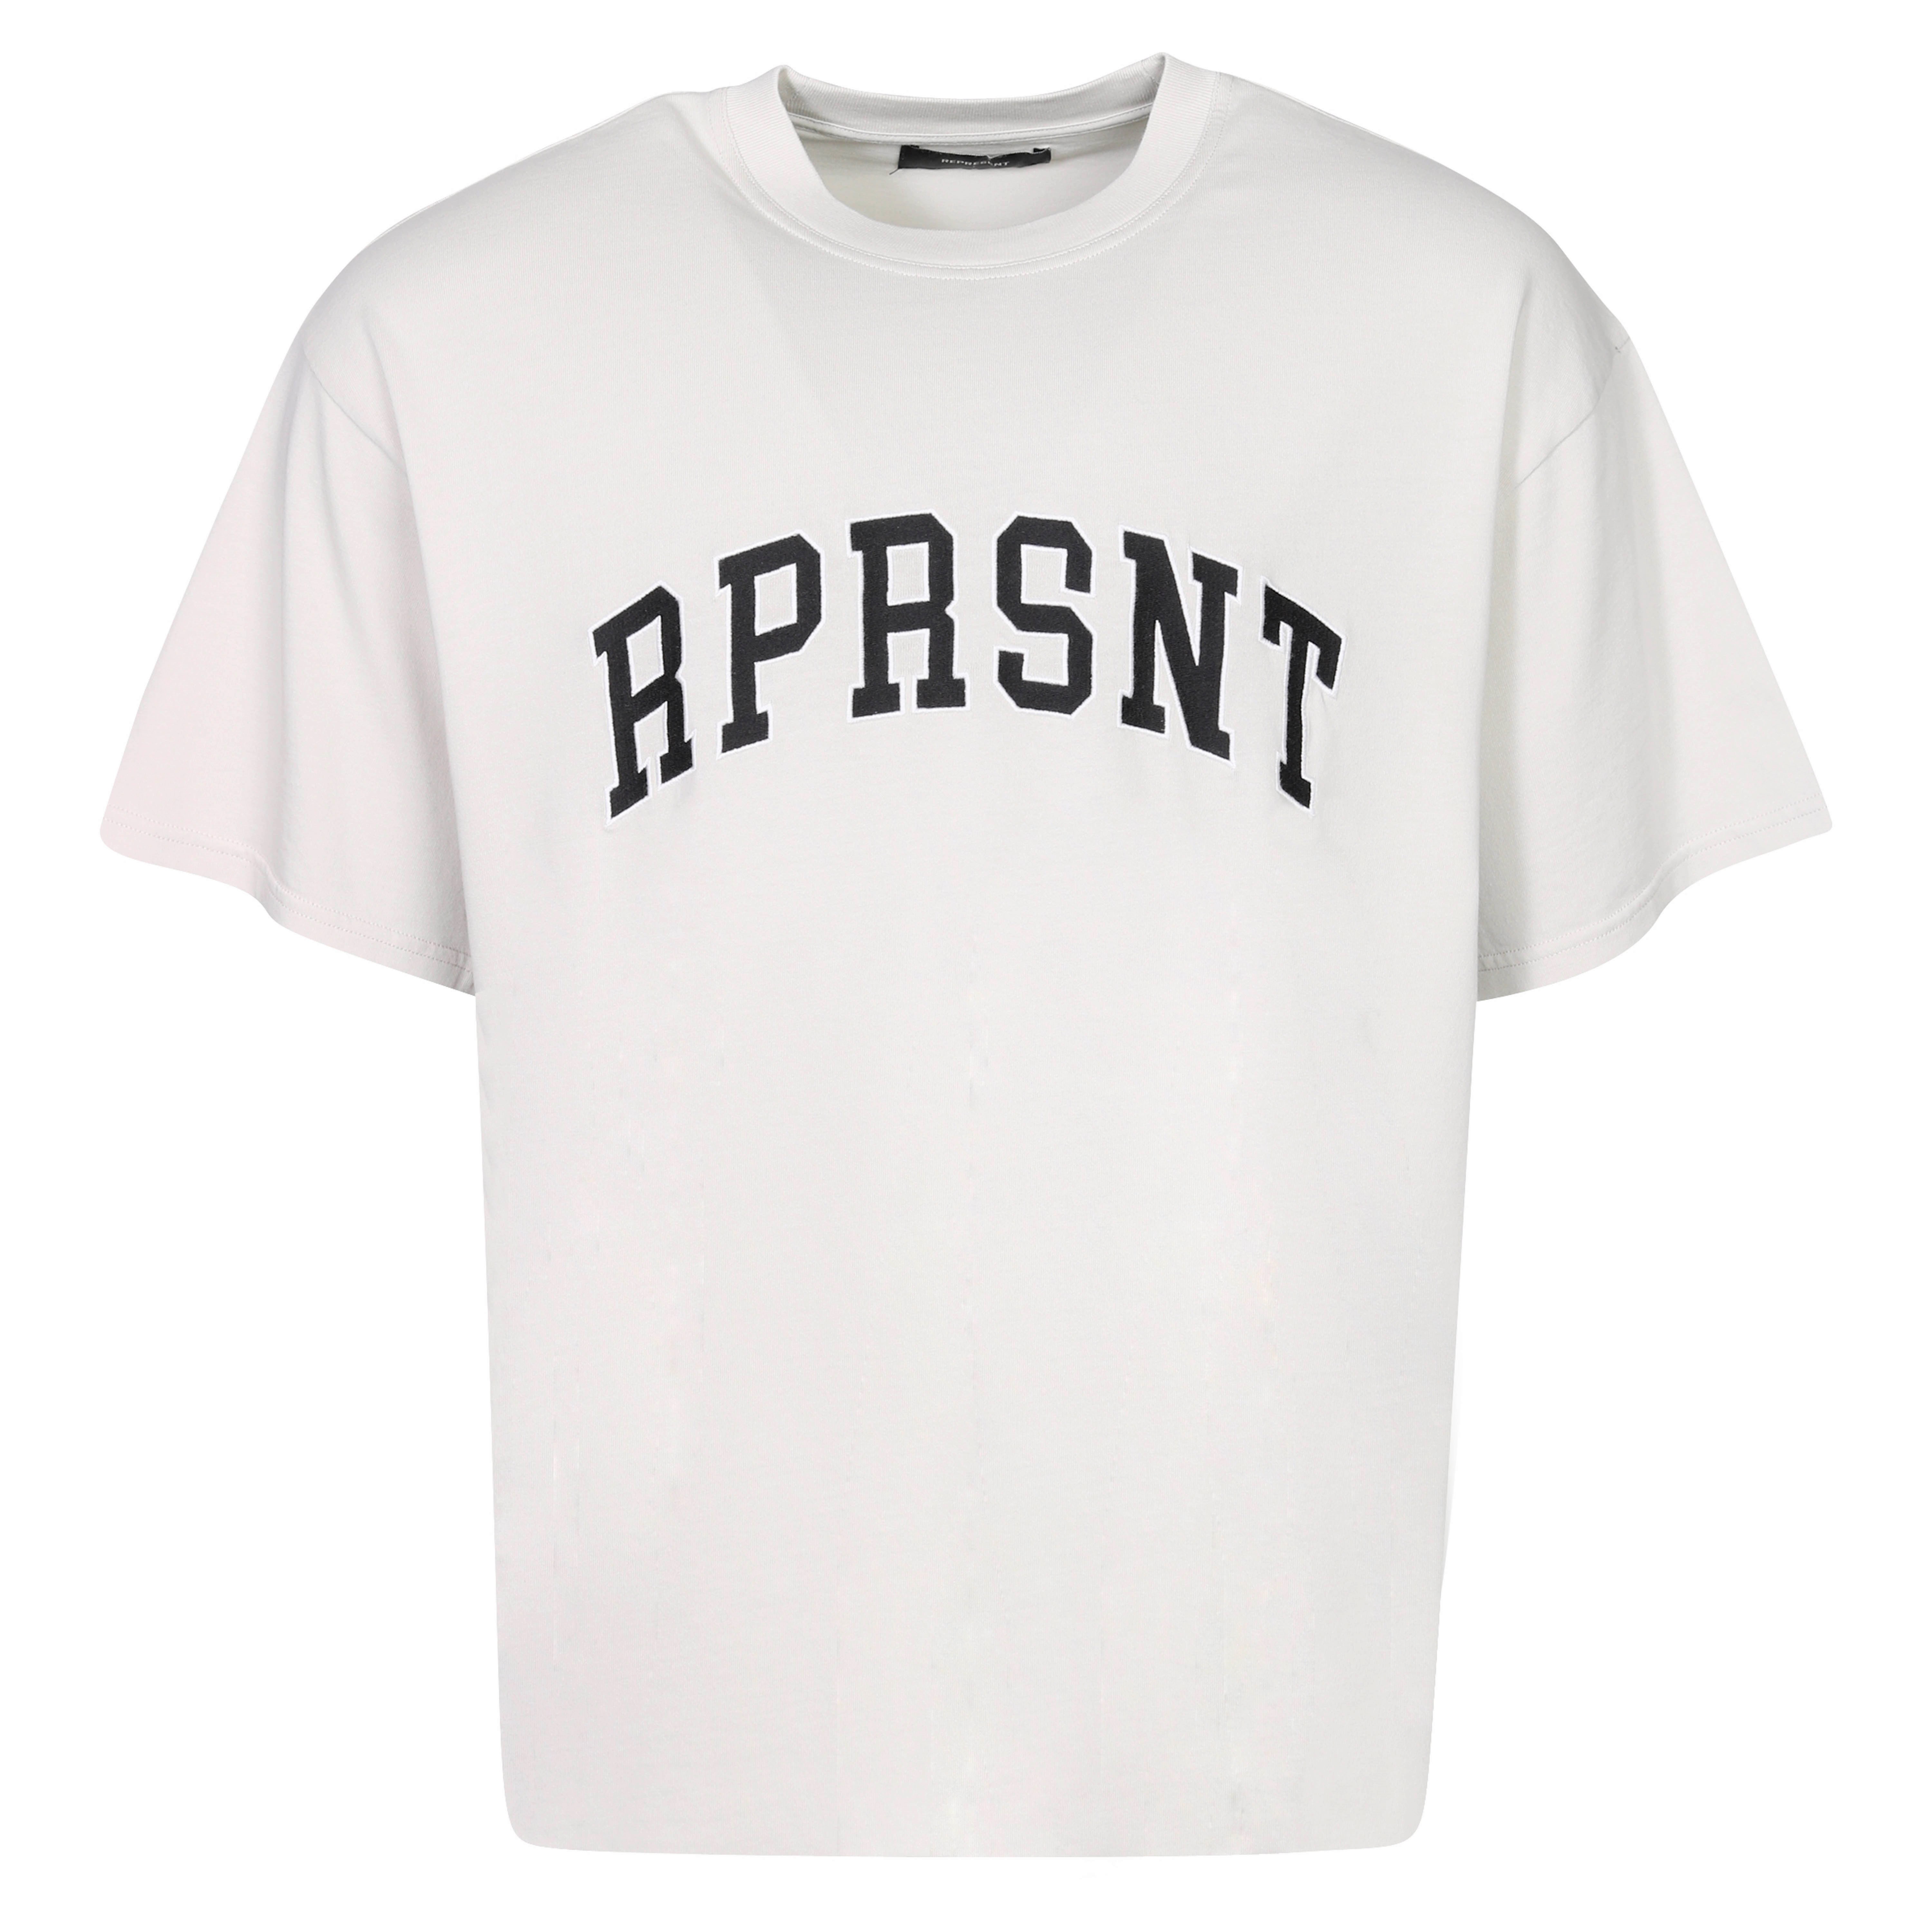 Represent RPRSNT T-Shirt in Concrete